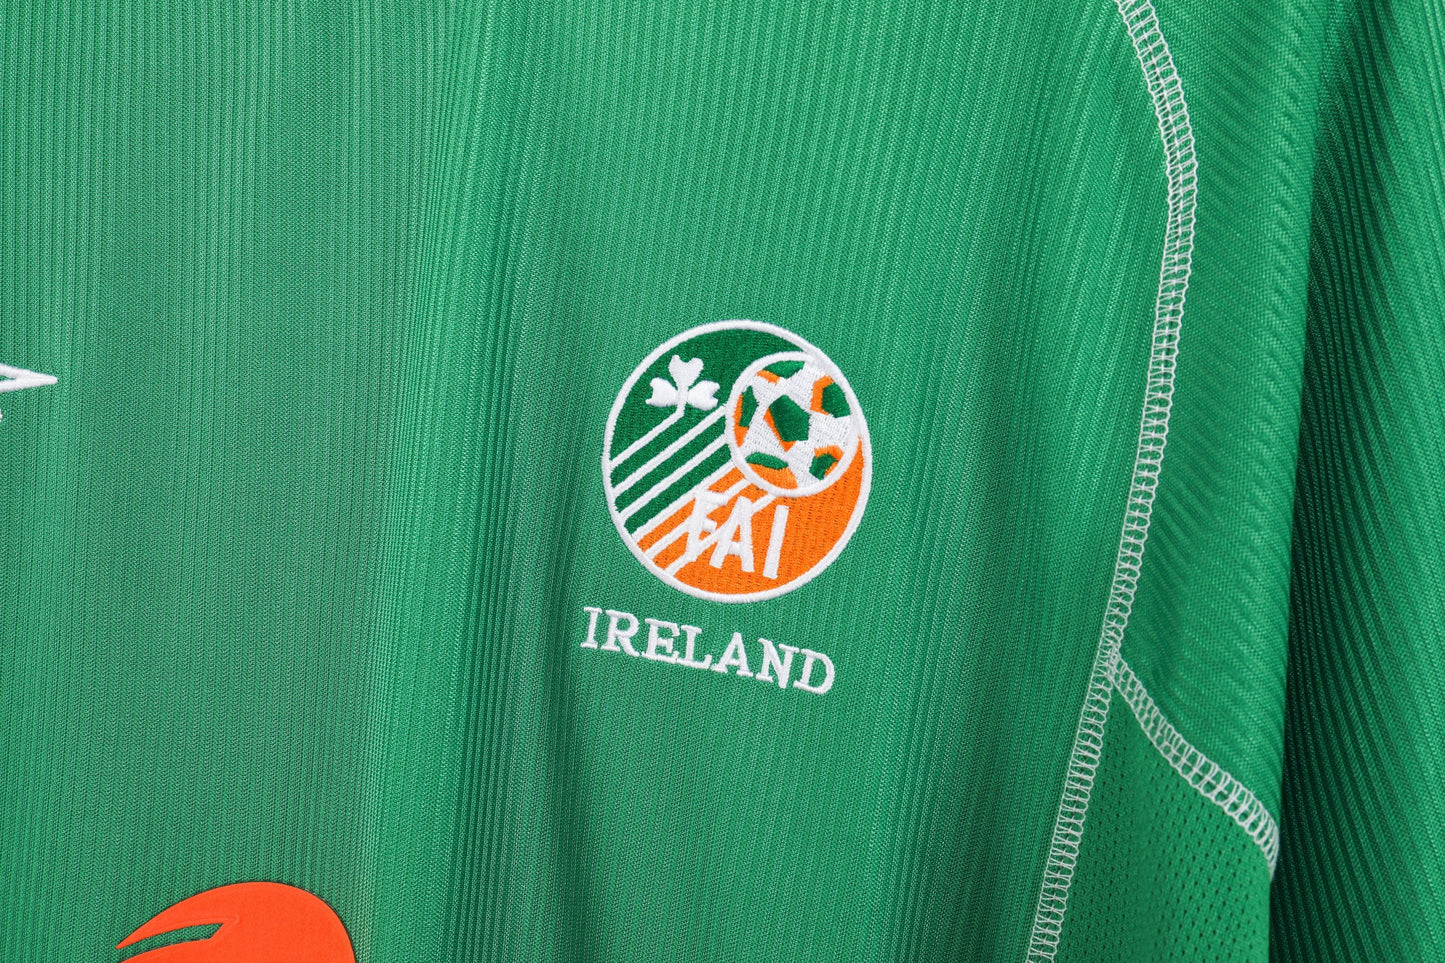 2002 World Cup Ireland home stadium